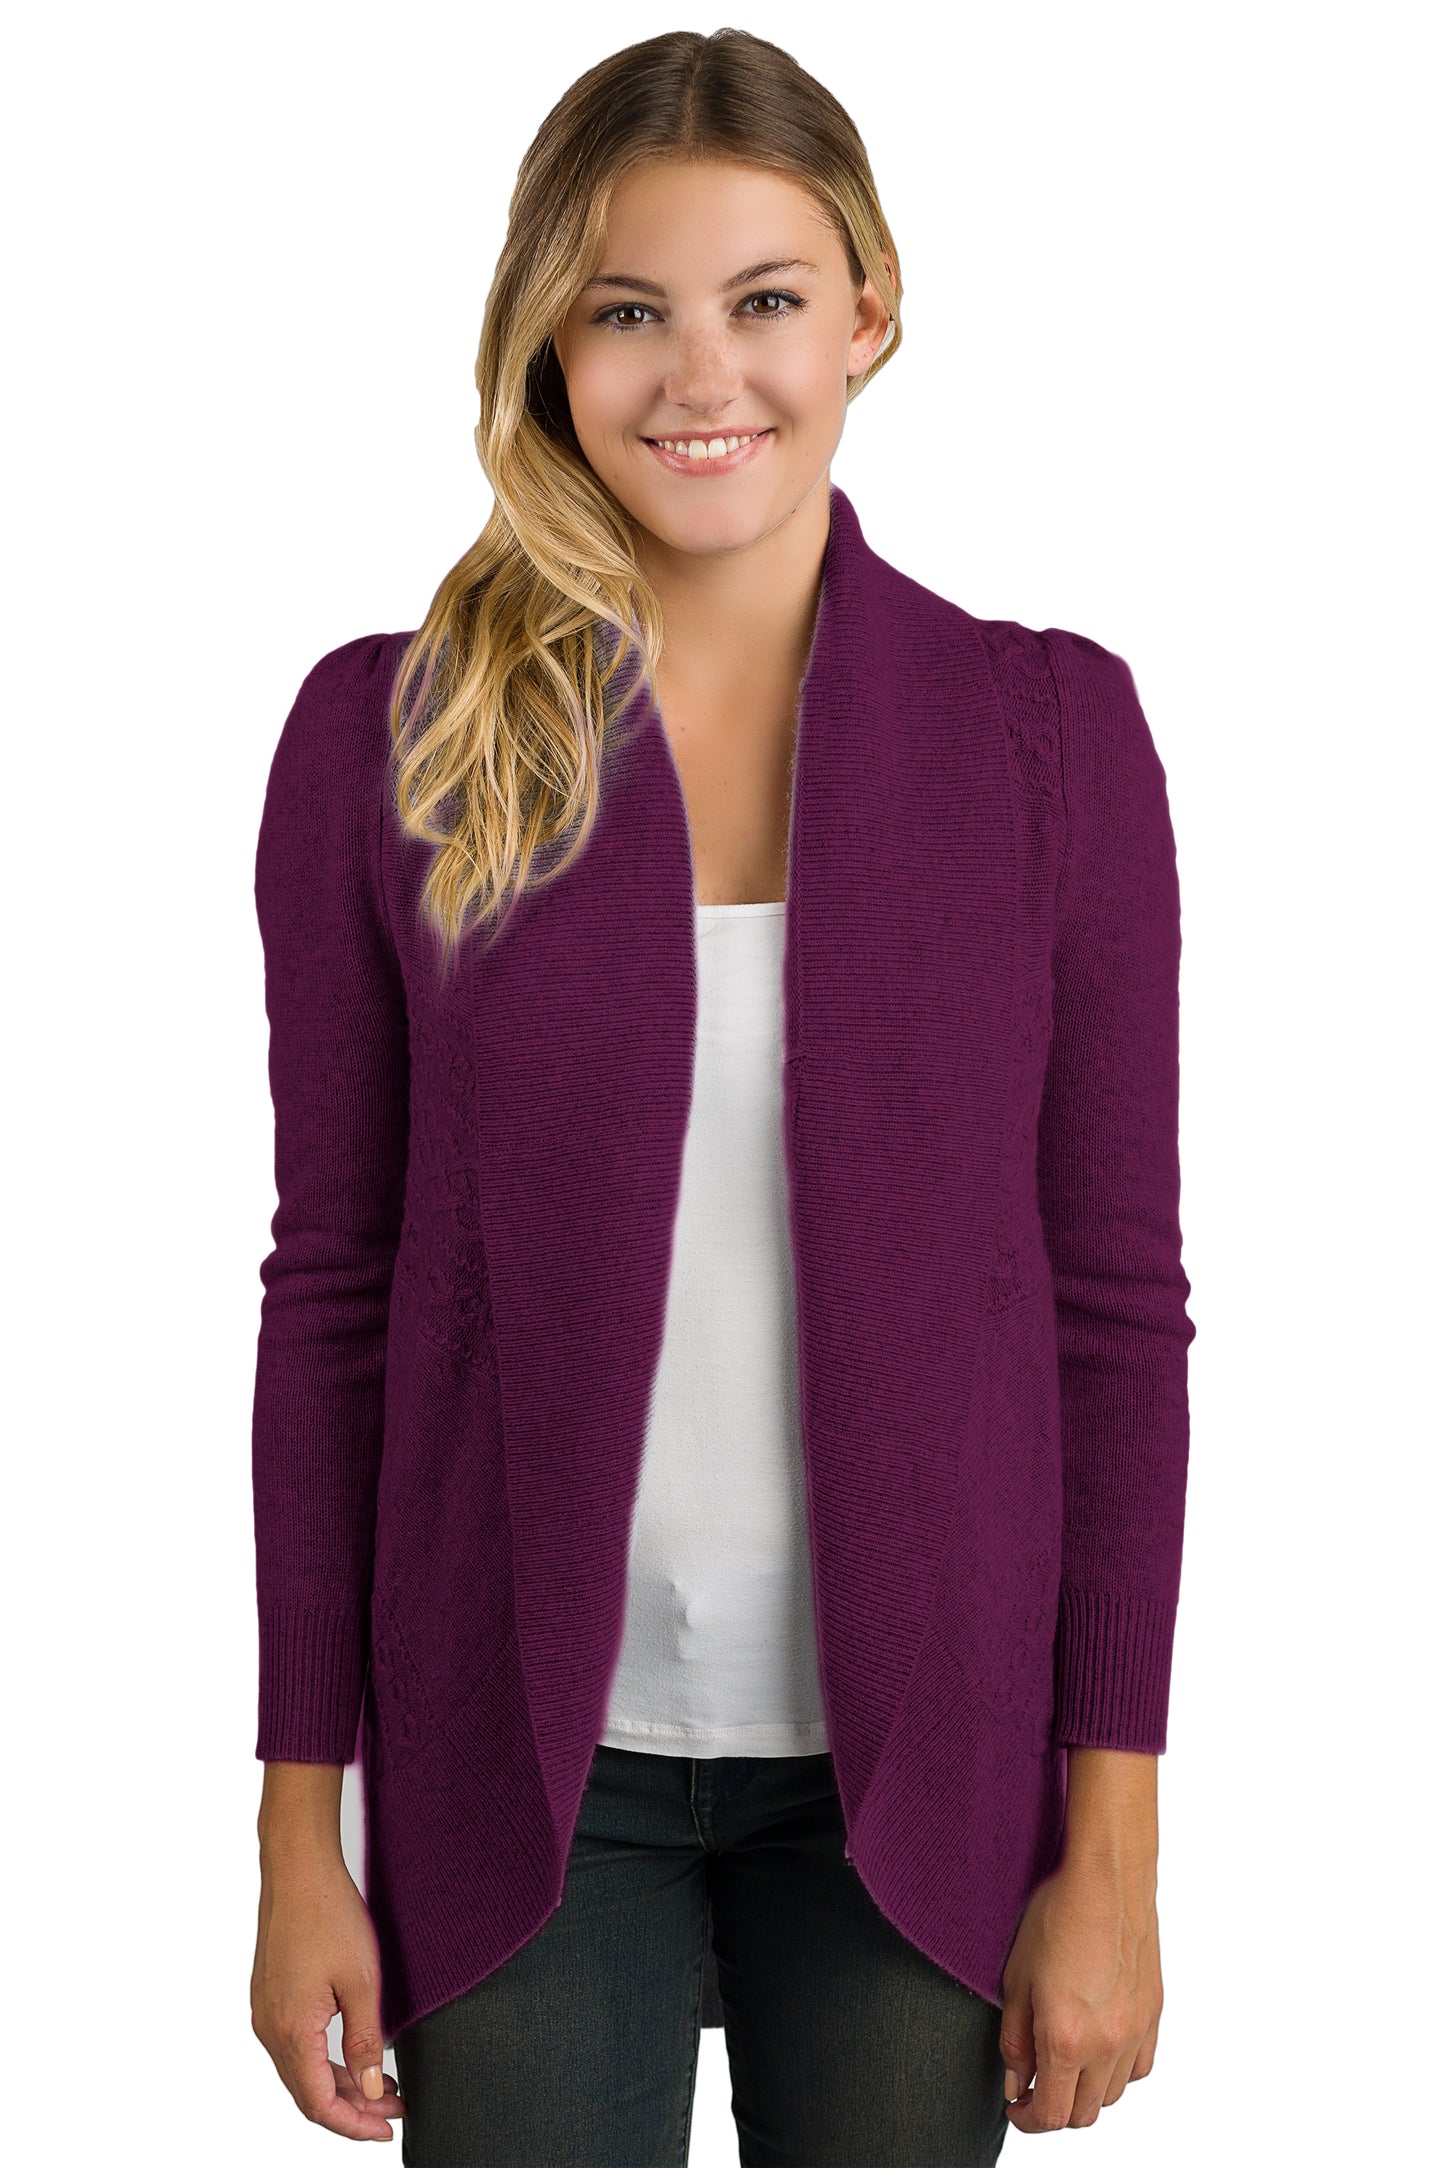 JENNIE LIU Women's 100% Pure Cashmere Long Sleeve Celine Cable-Knit Open Cardigan Sweater